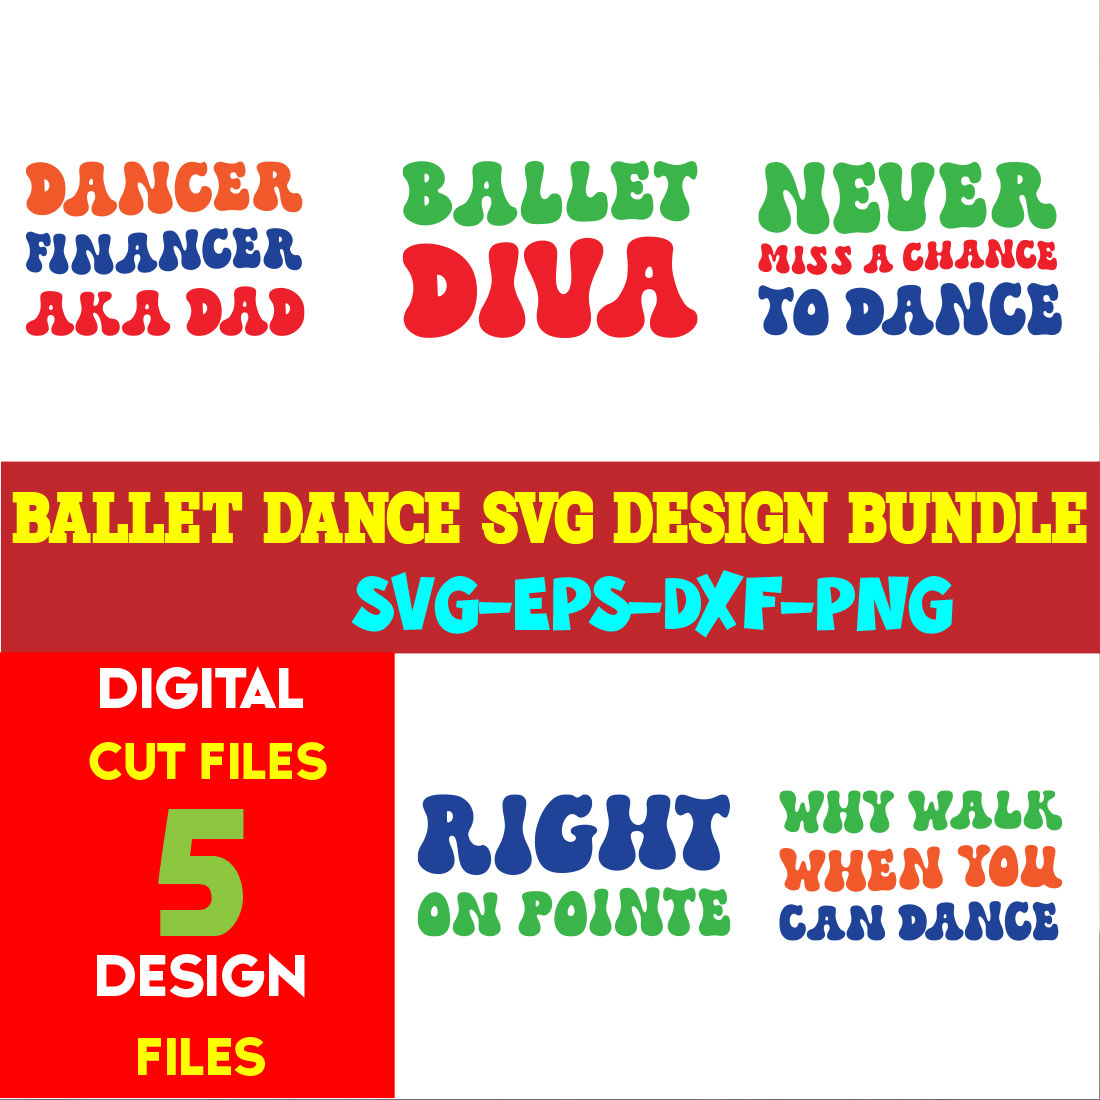 Ballet Dance T-shirt Design Bundle Volume -02 cover image.